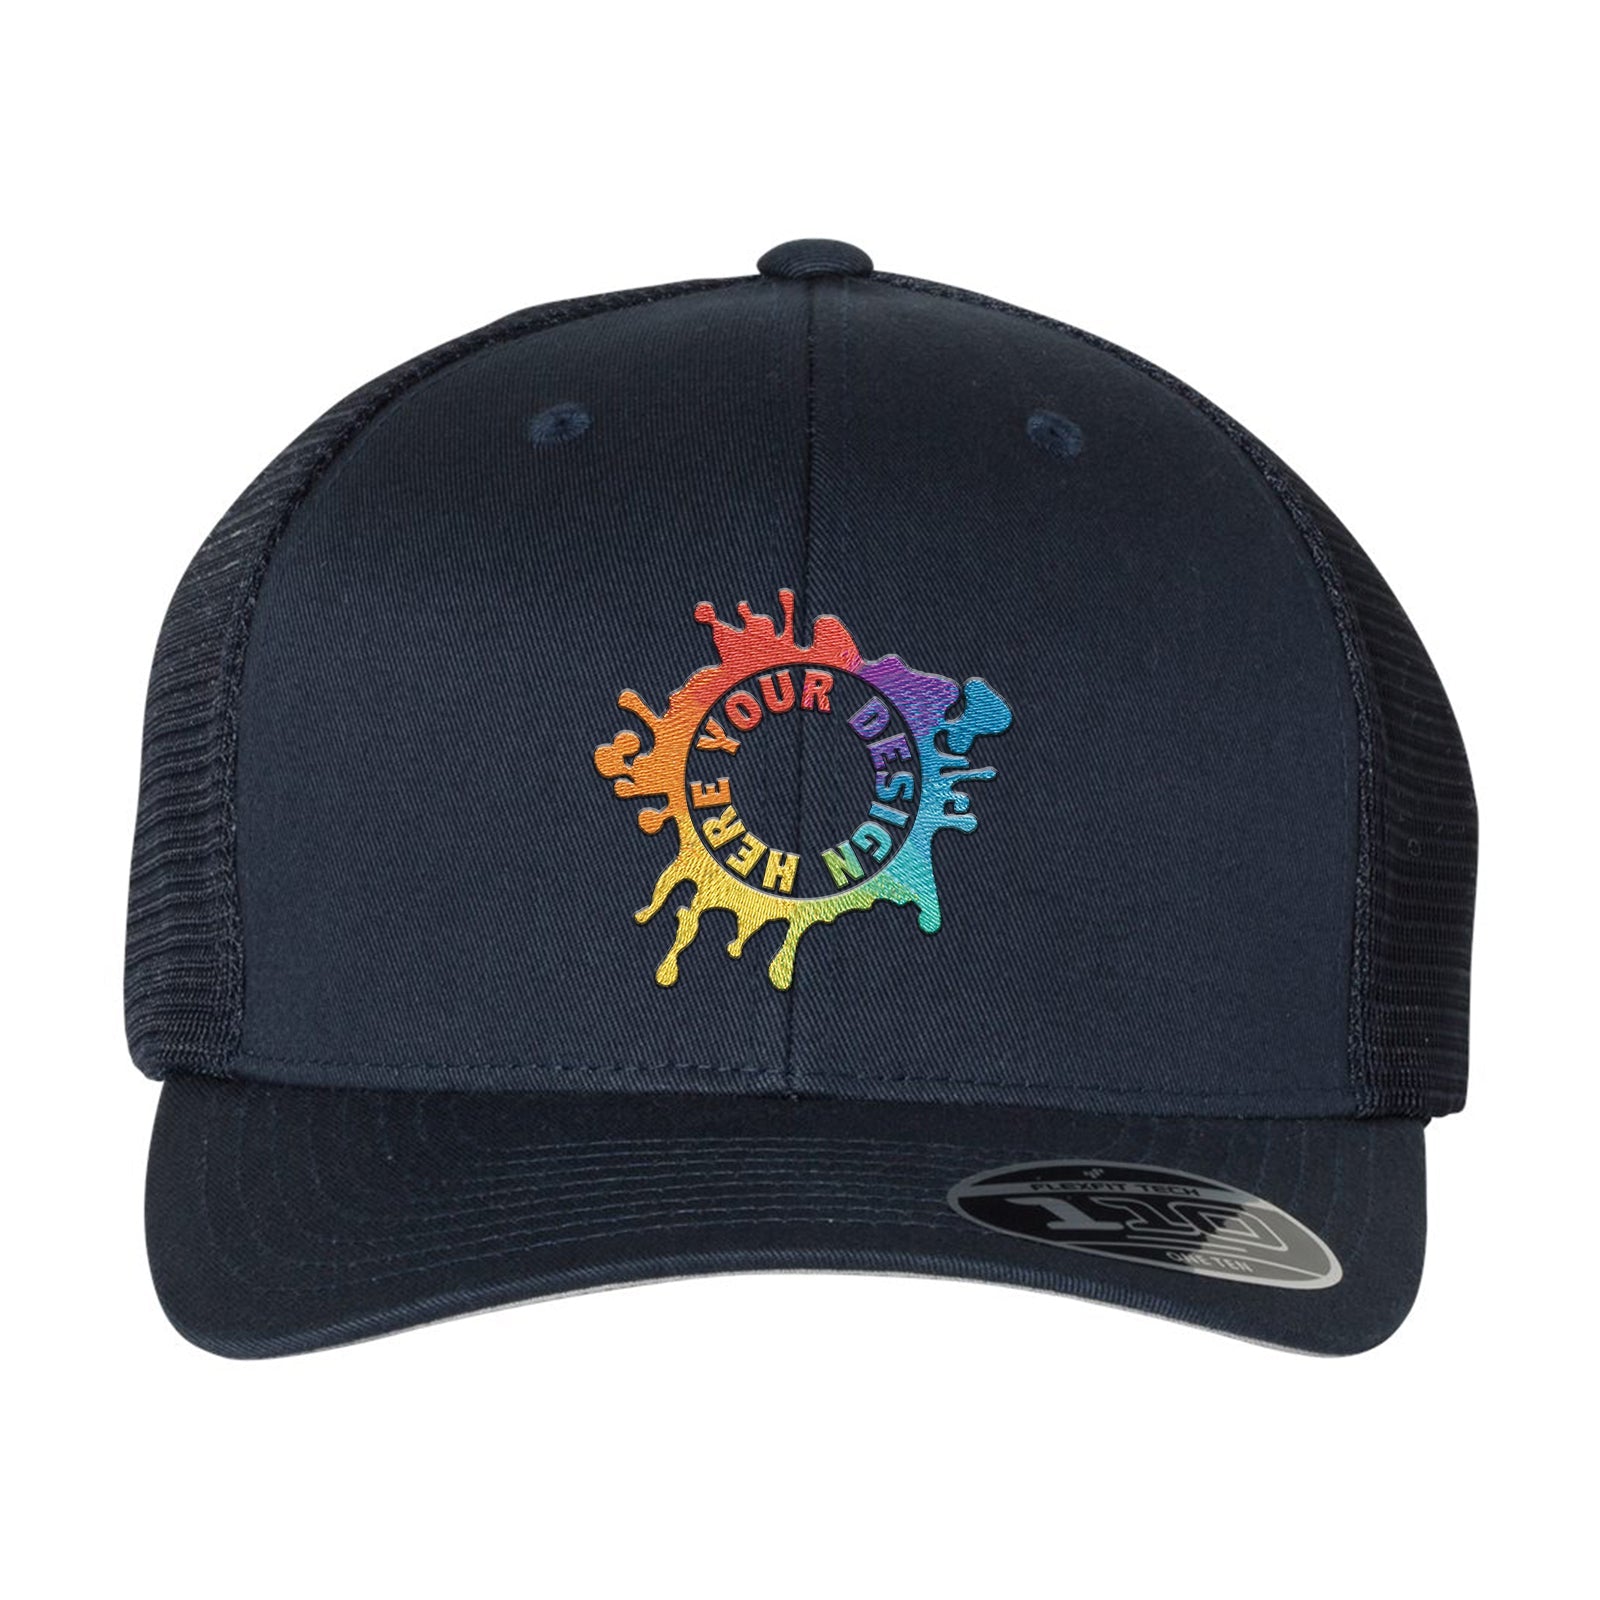 Custom Flexfit Hats - Design Create Online and